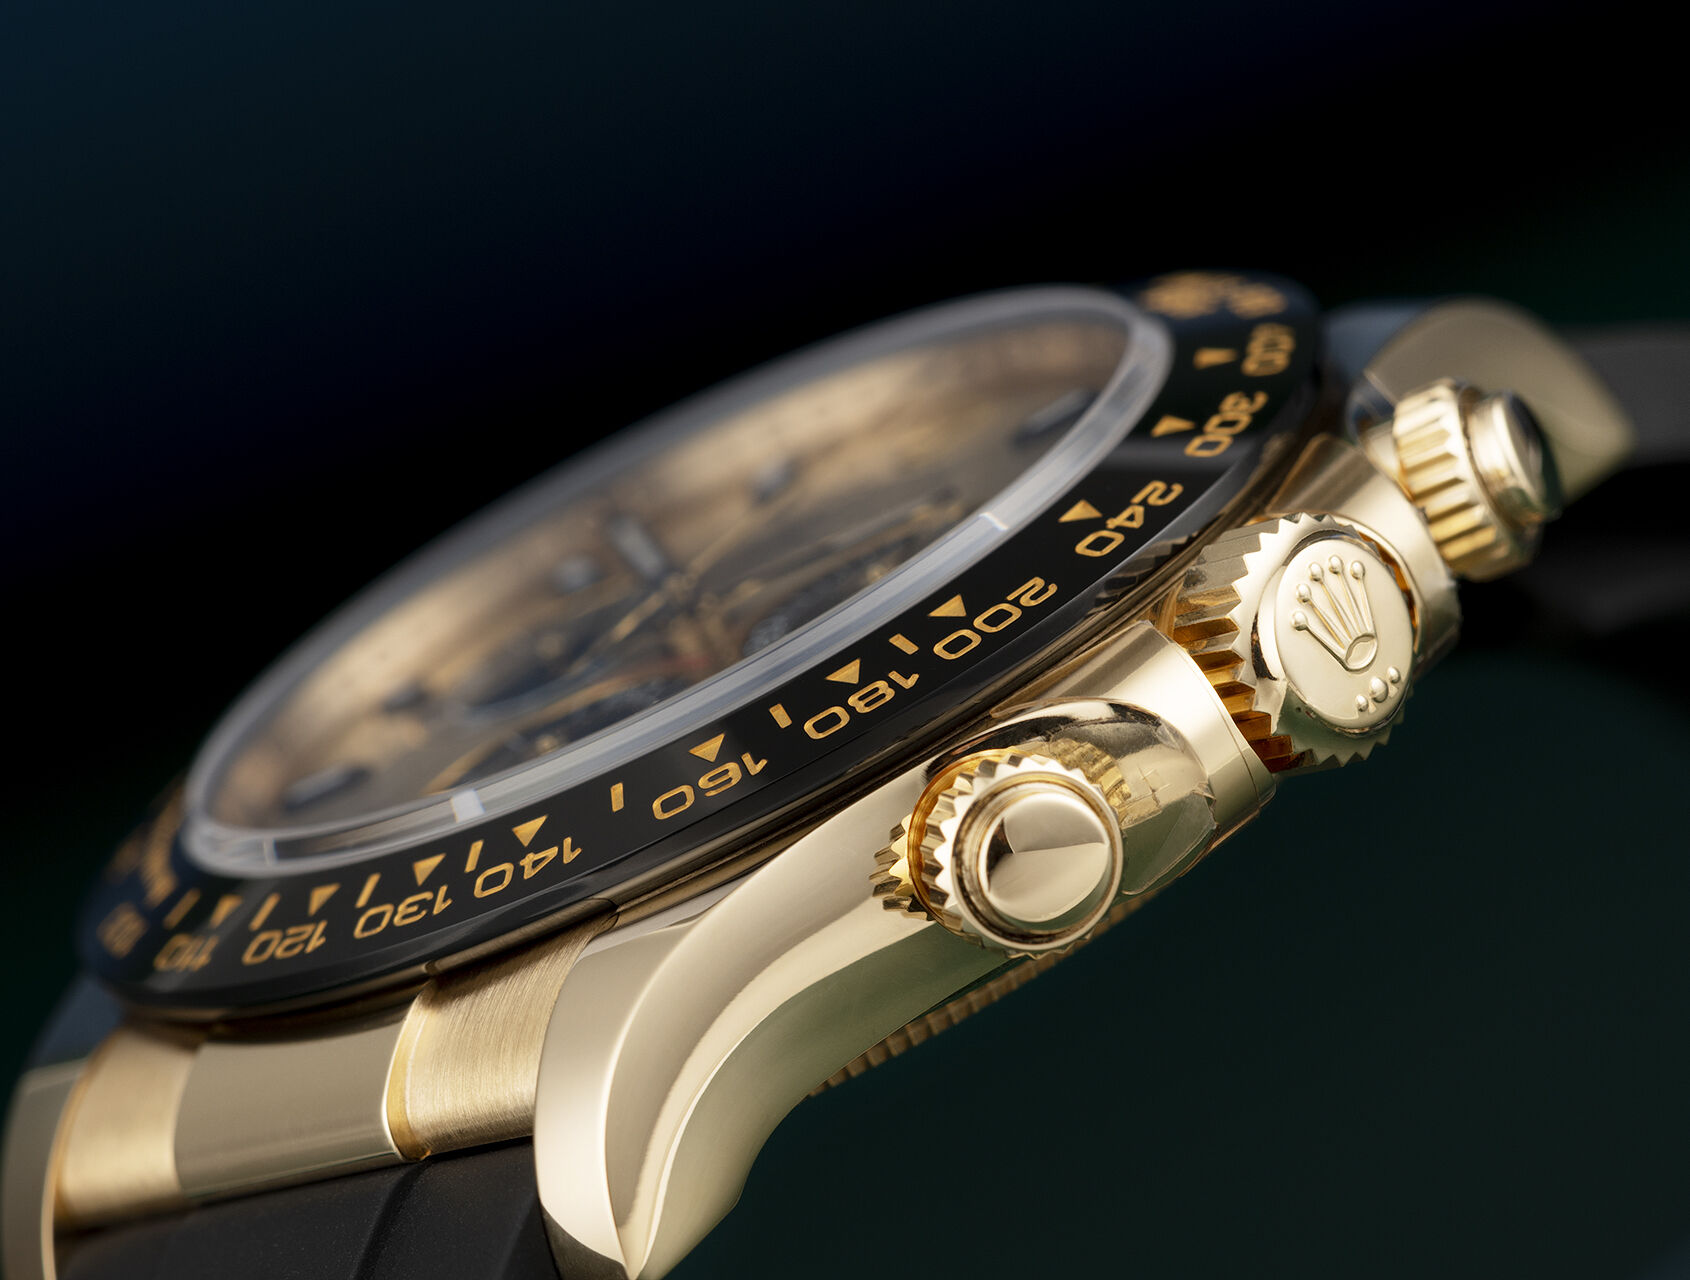 ref 116518LN | 116518LN - Brand New | Rolex Cosmograph Daytona